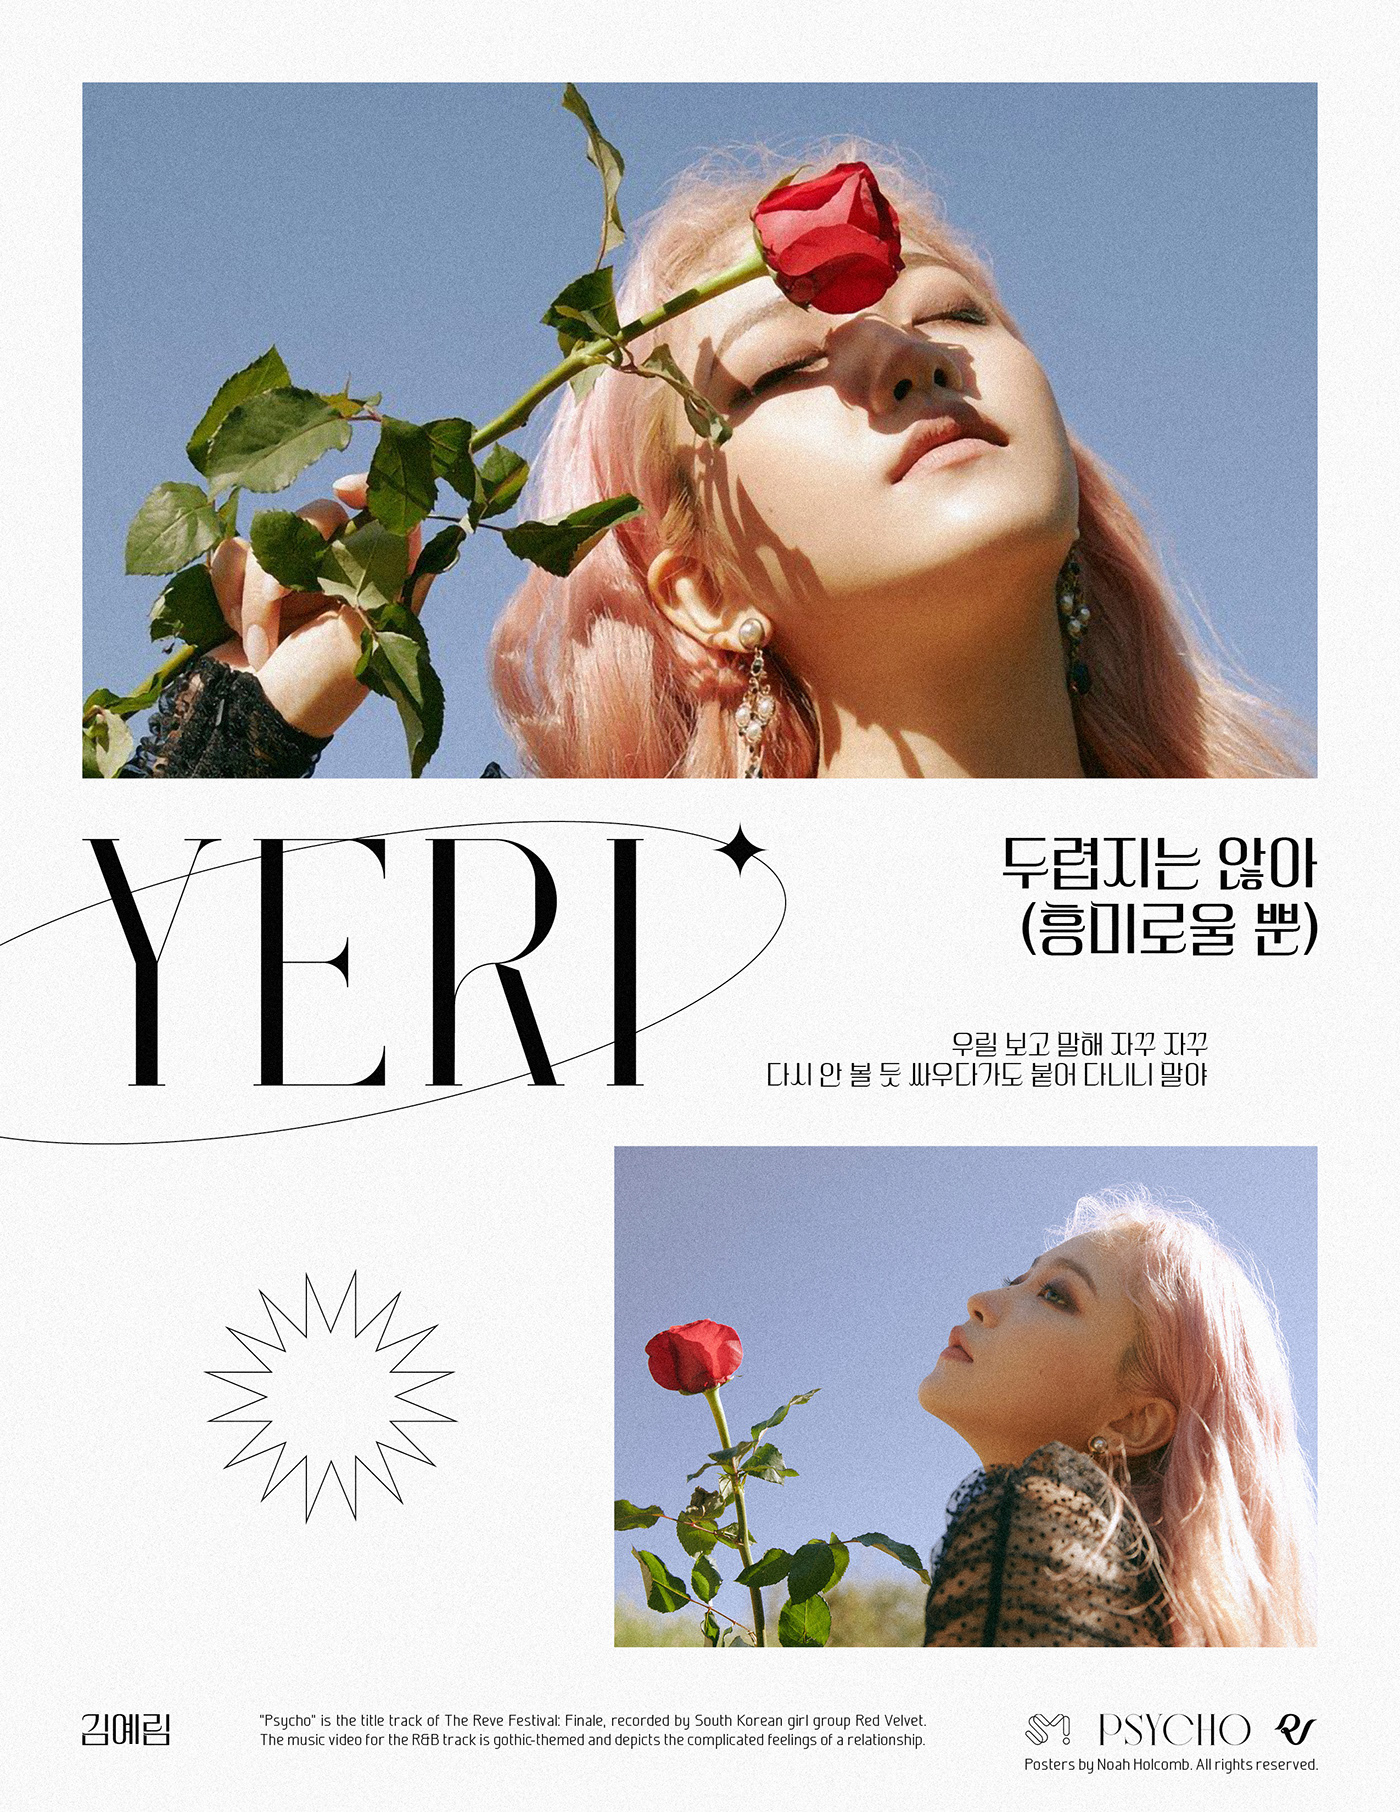 Red Velvet "Psycho" Posters - Yeri